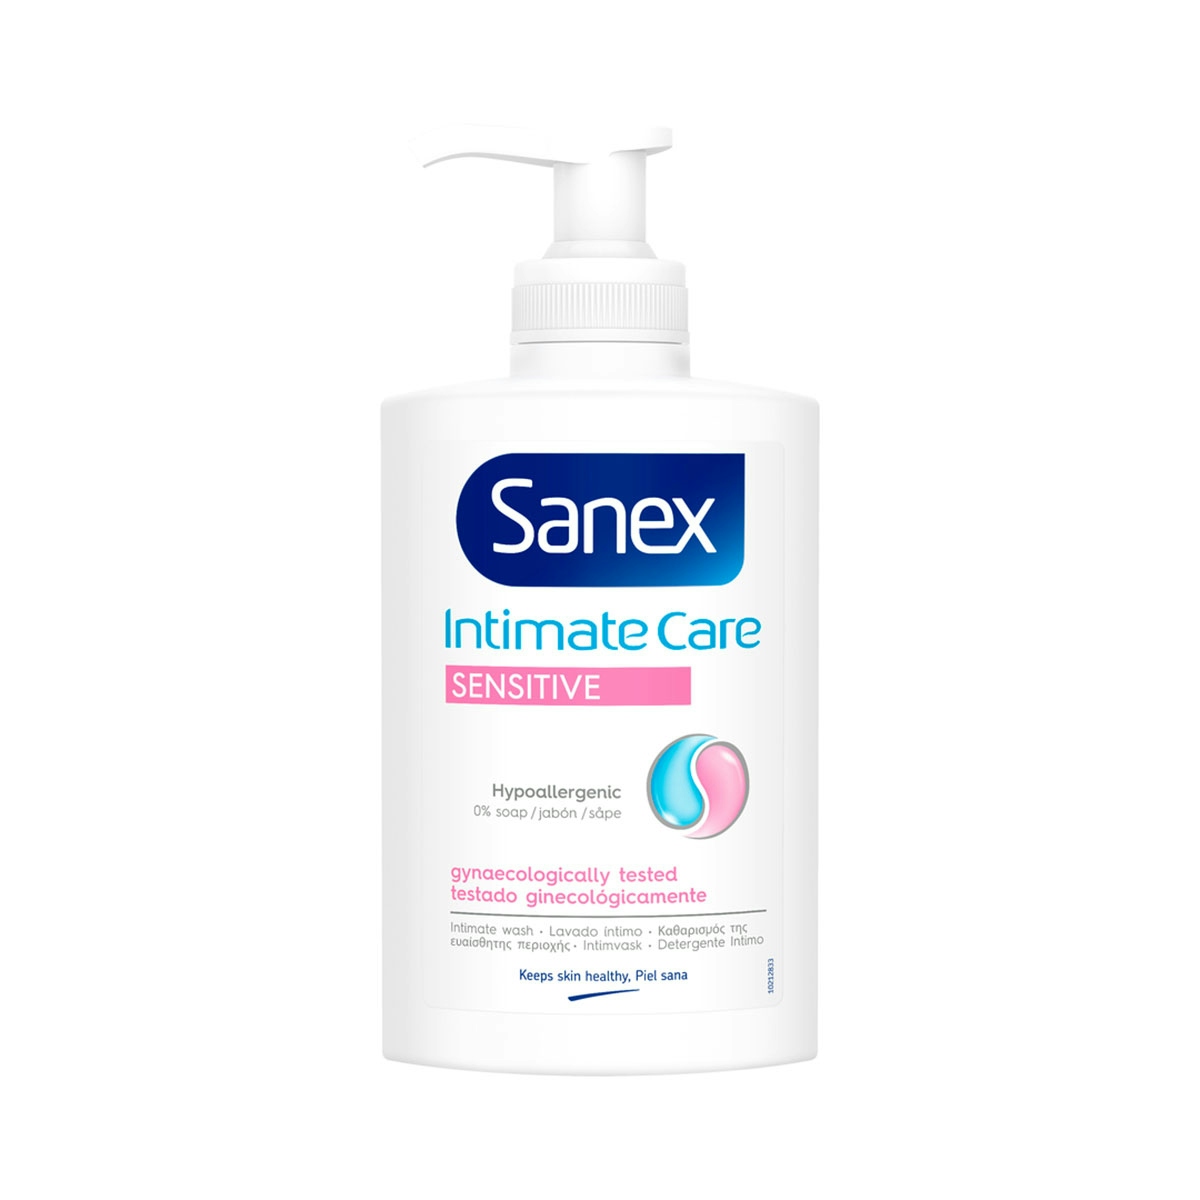 Gel lavado íntimo Sanex Intimate Care, pieles sensibles hipoalergénico 250ml